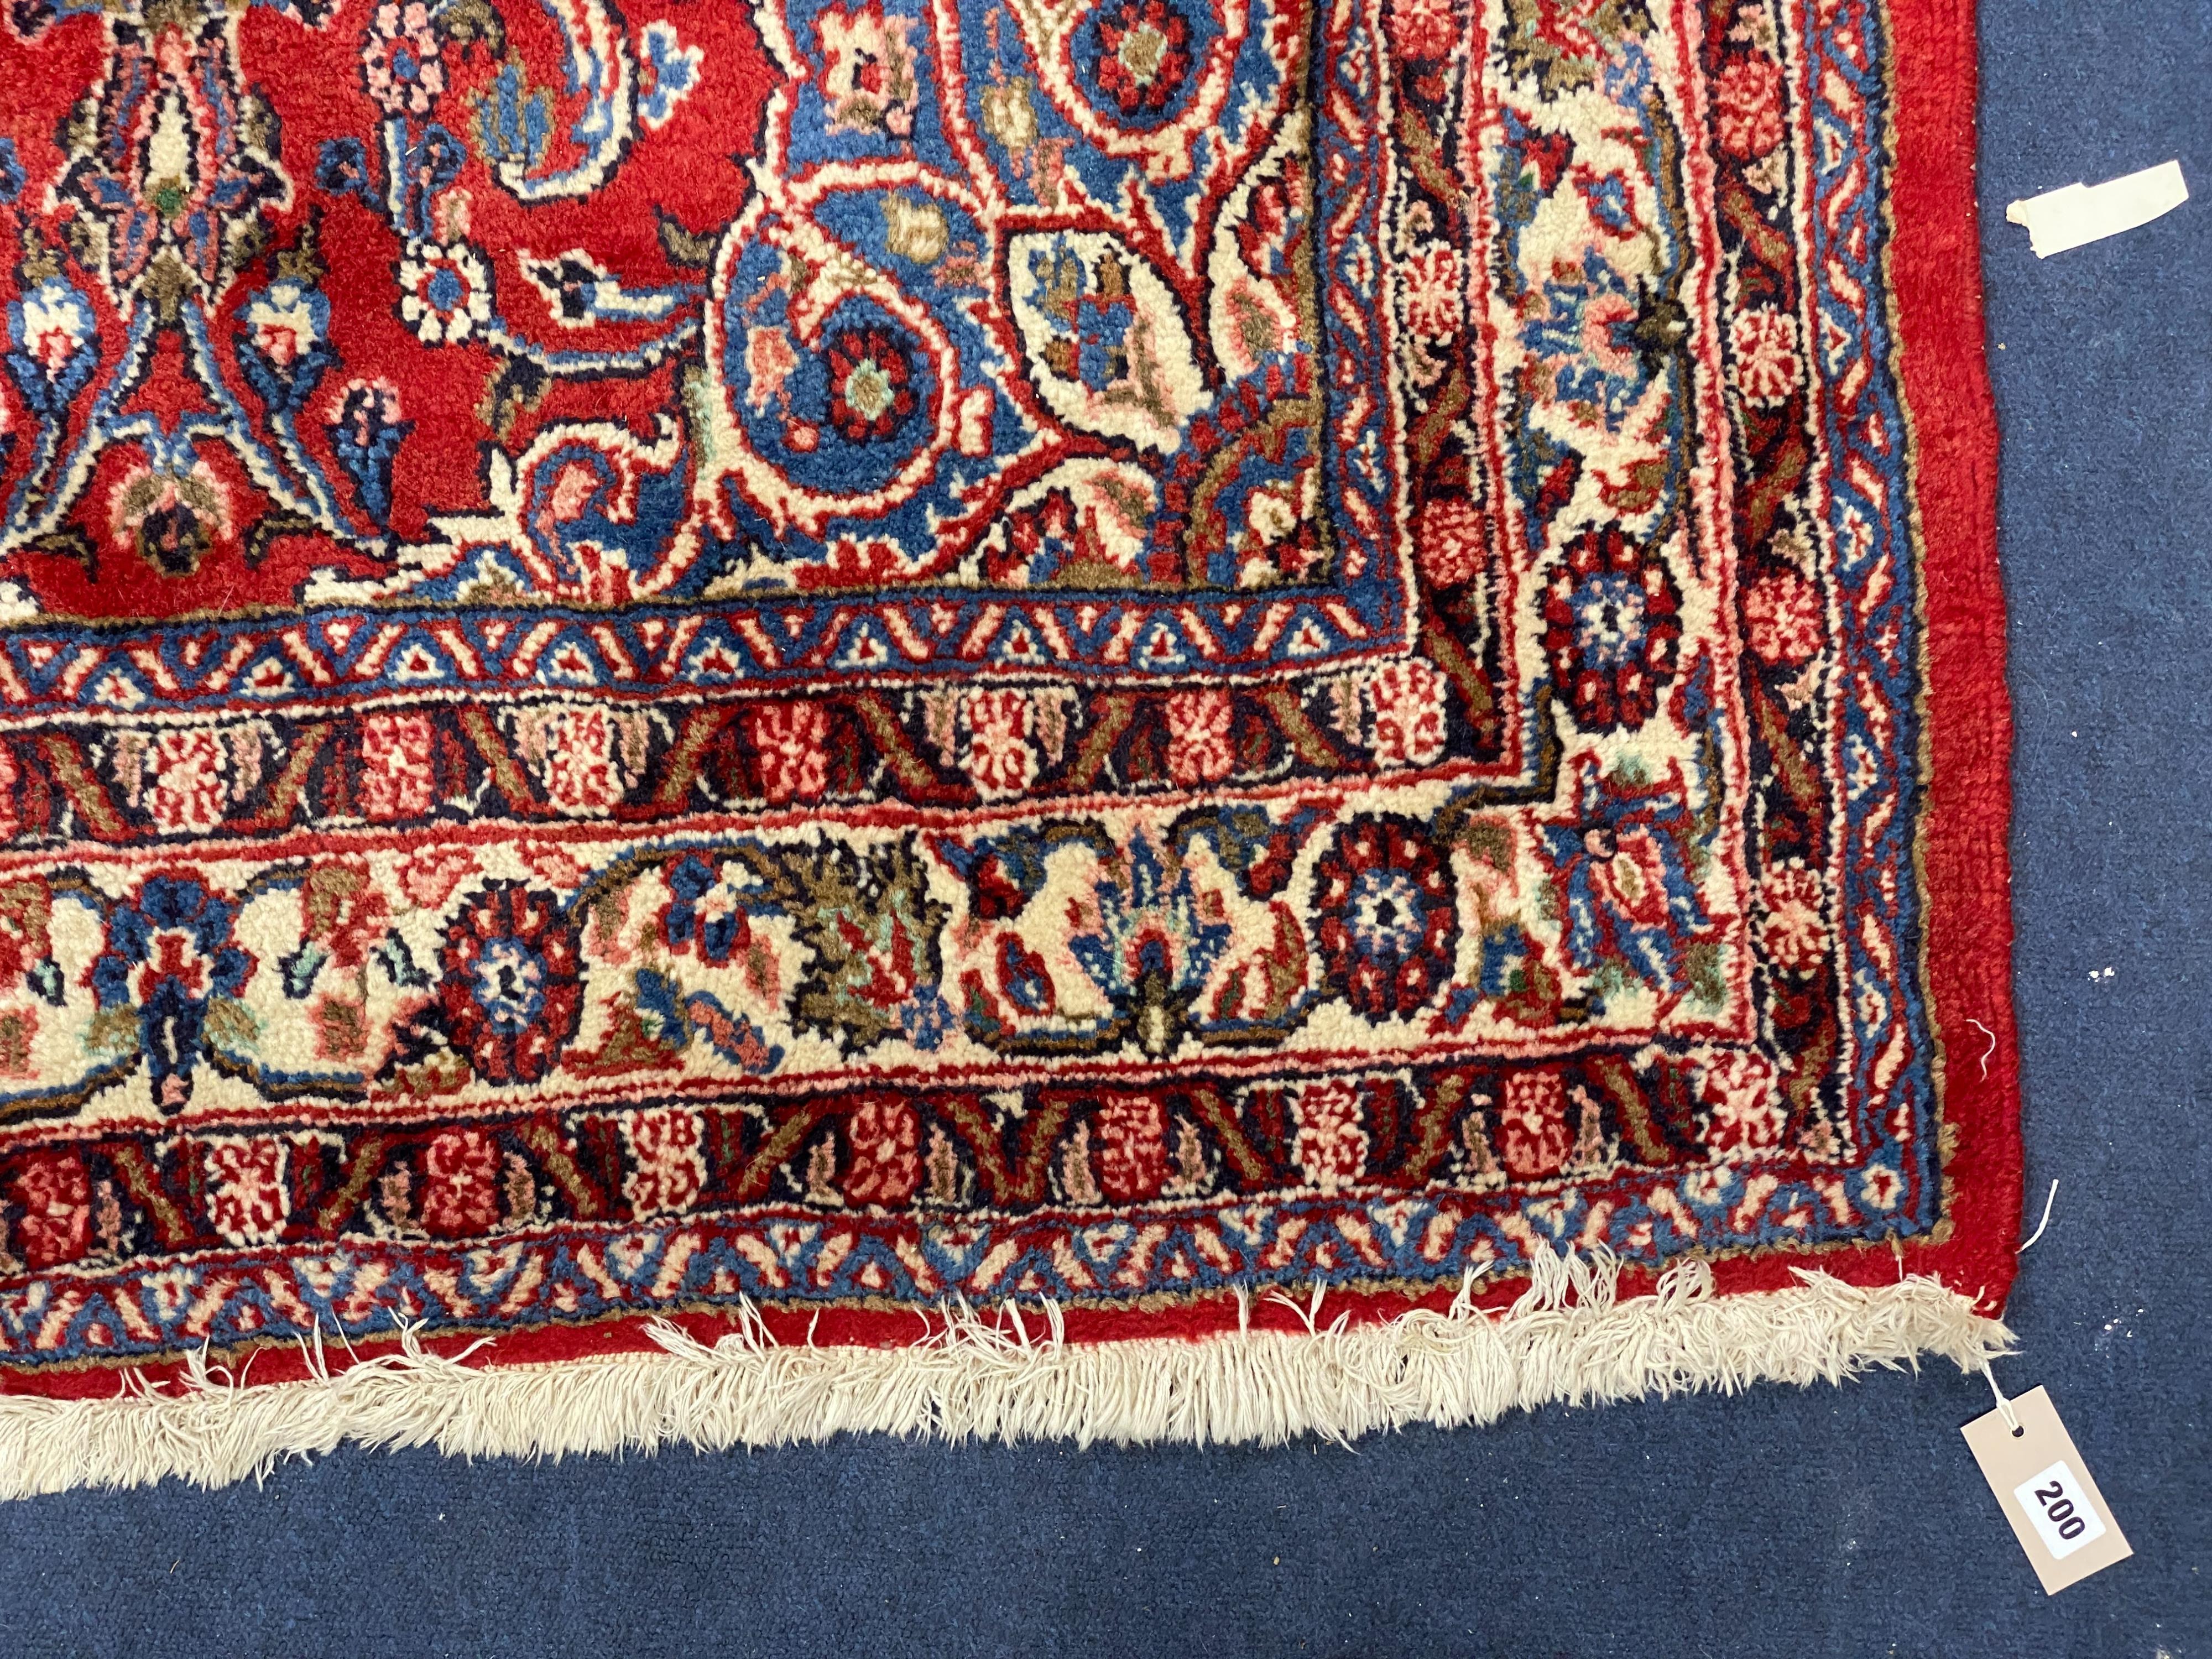 A Northwest Persian red ground rug, 240 cm x 136 cm